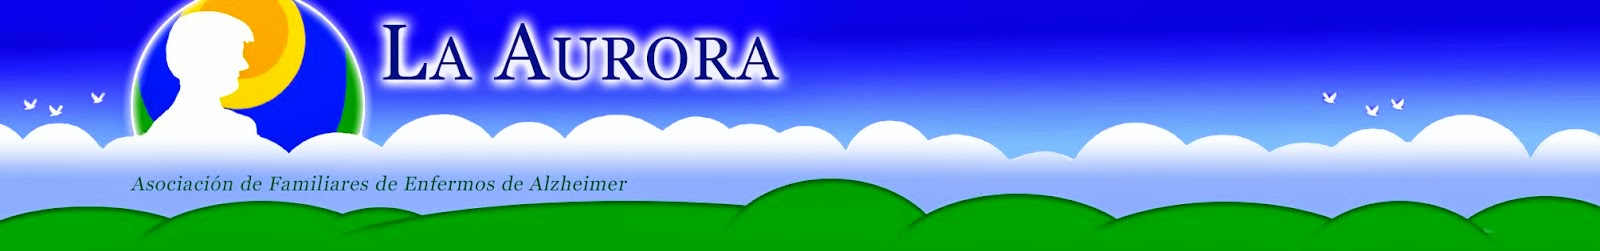 AFA La Aurora